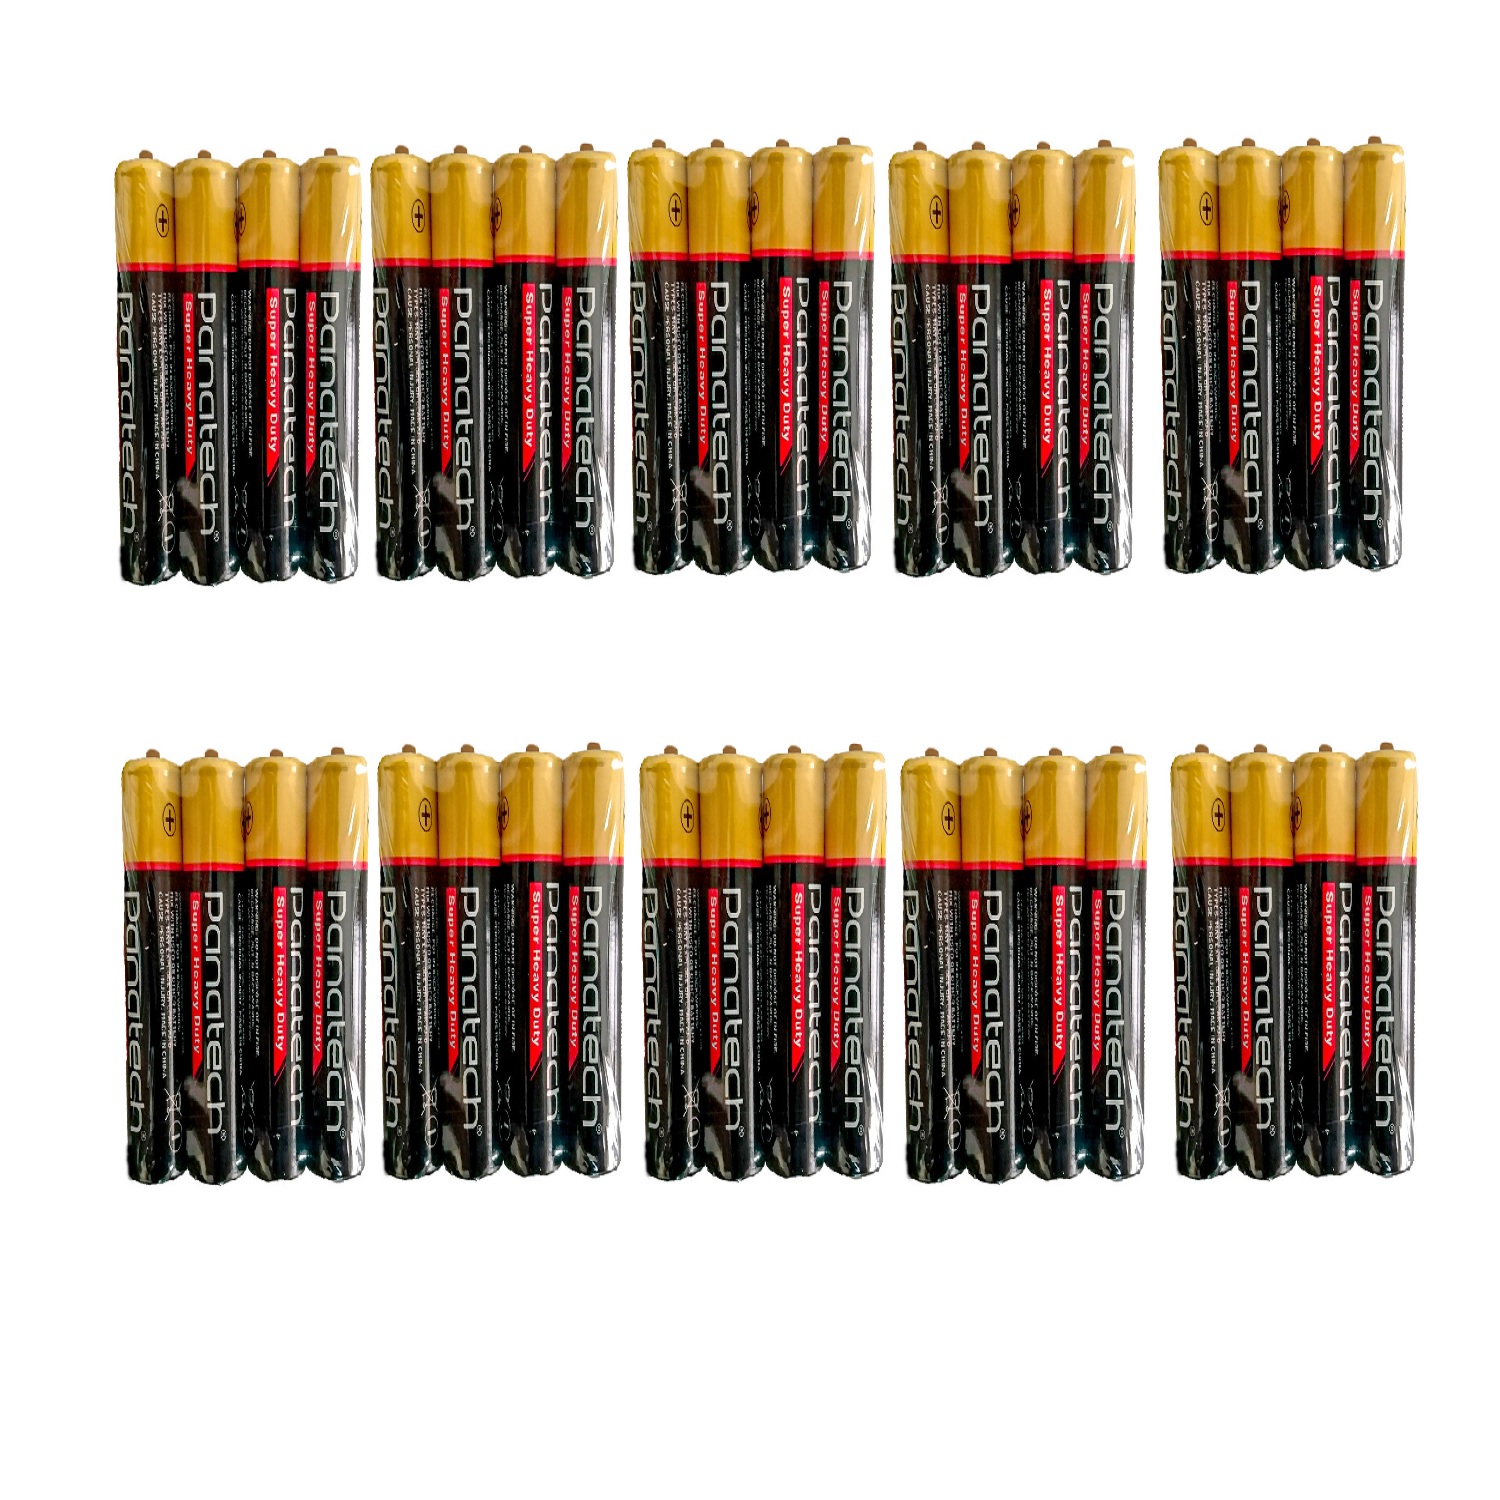 باتری نیم قلمی پاناتک مدل Zinc Carbon R03 AAA Shrink بسته 40 عددی